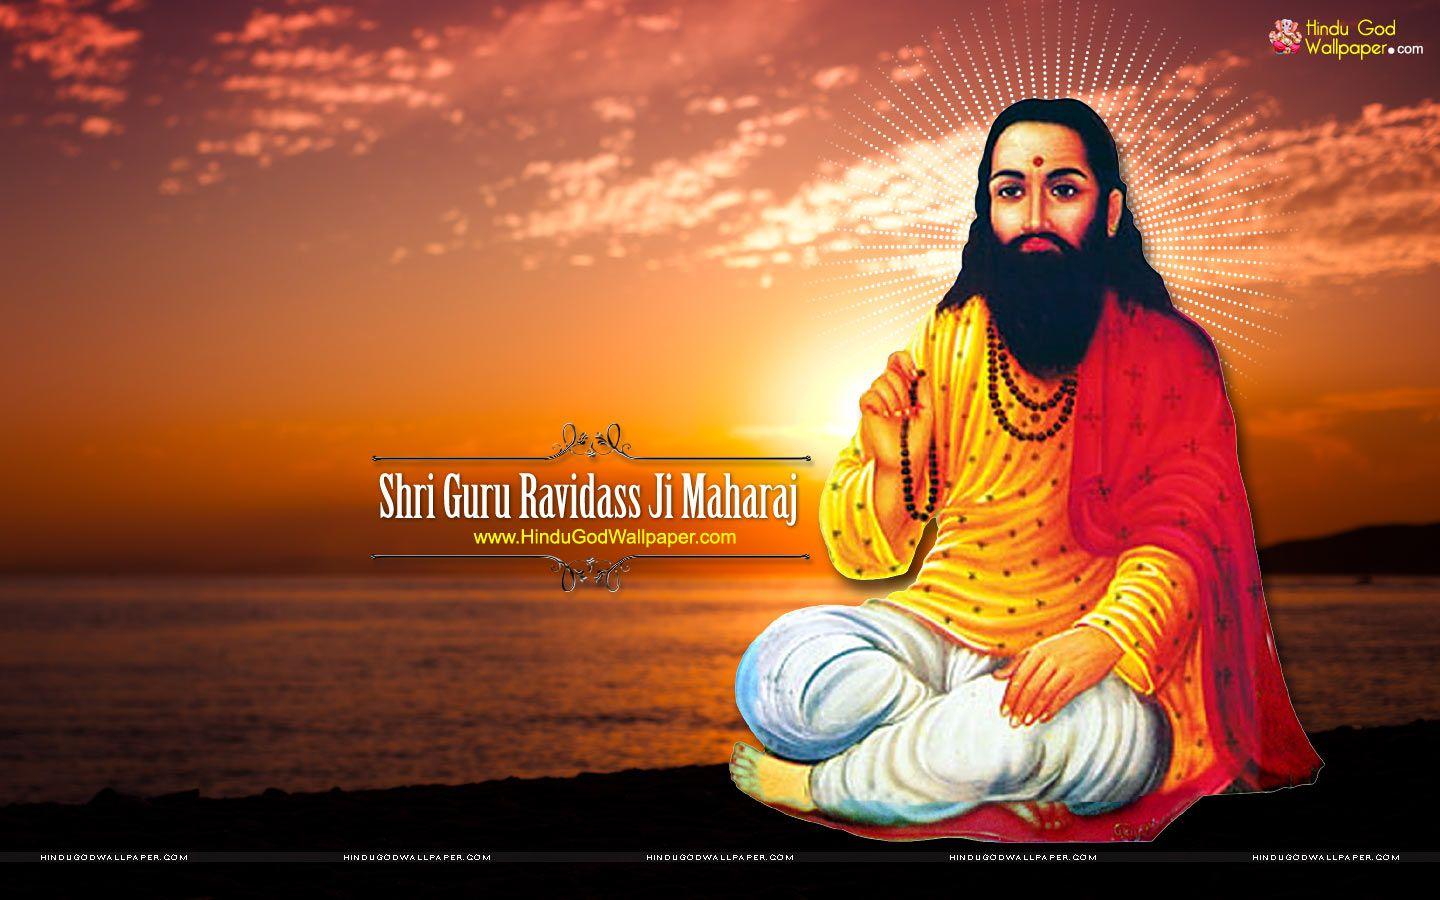 Guru Ravidas Hd Wallpaper Images Photod Download - God HD Wallpapers